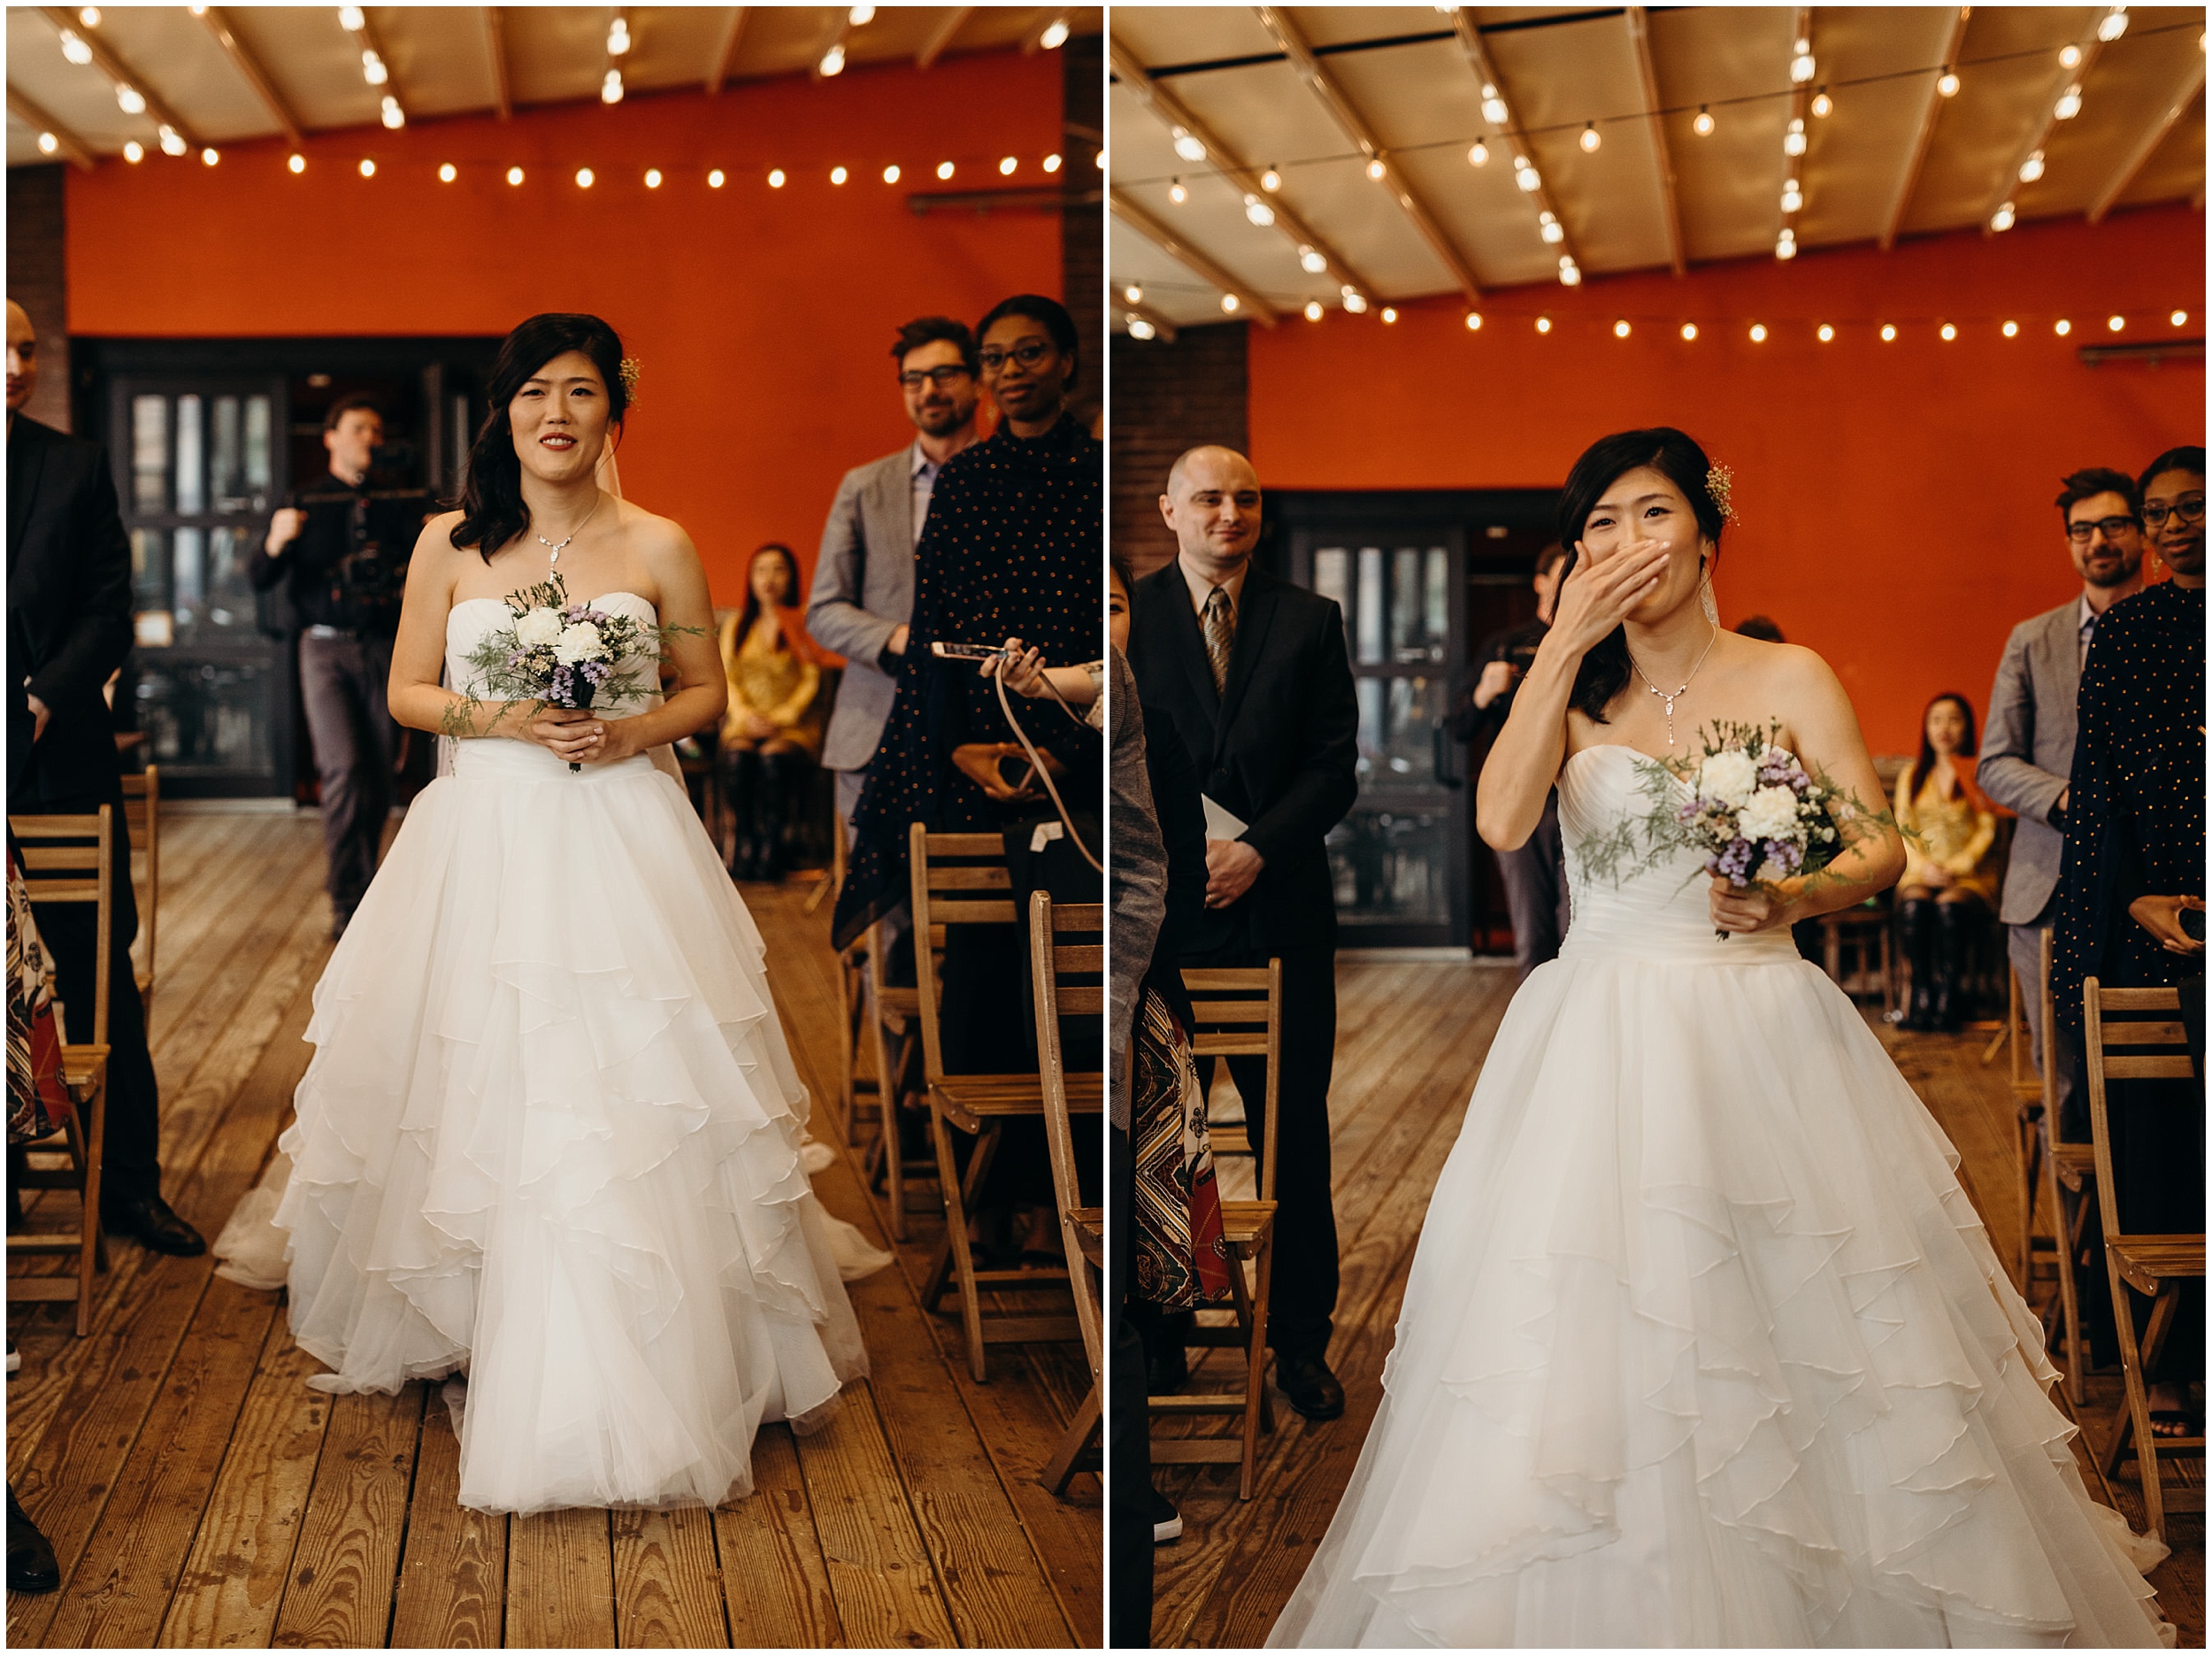 a bride walks down her wedding aisle at mymoon in brooklyn, new york